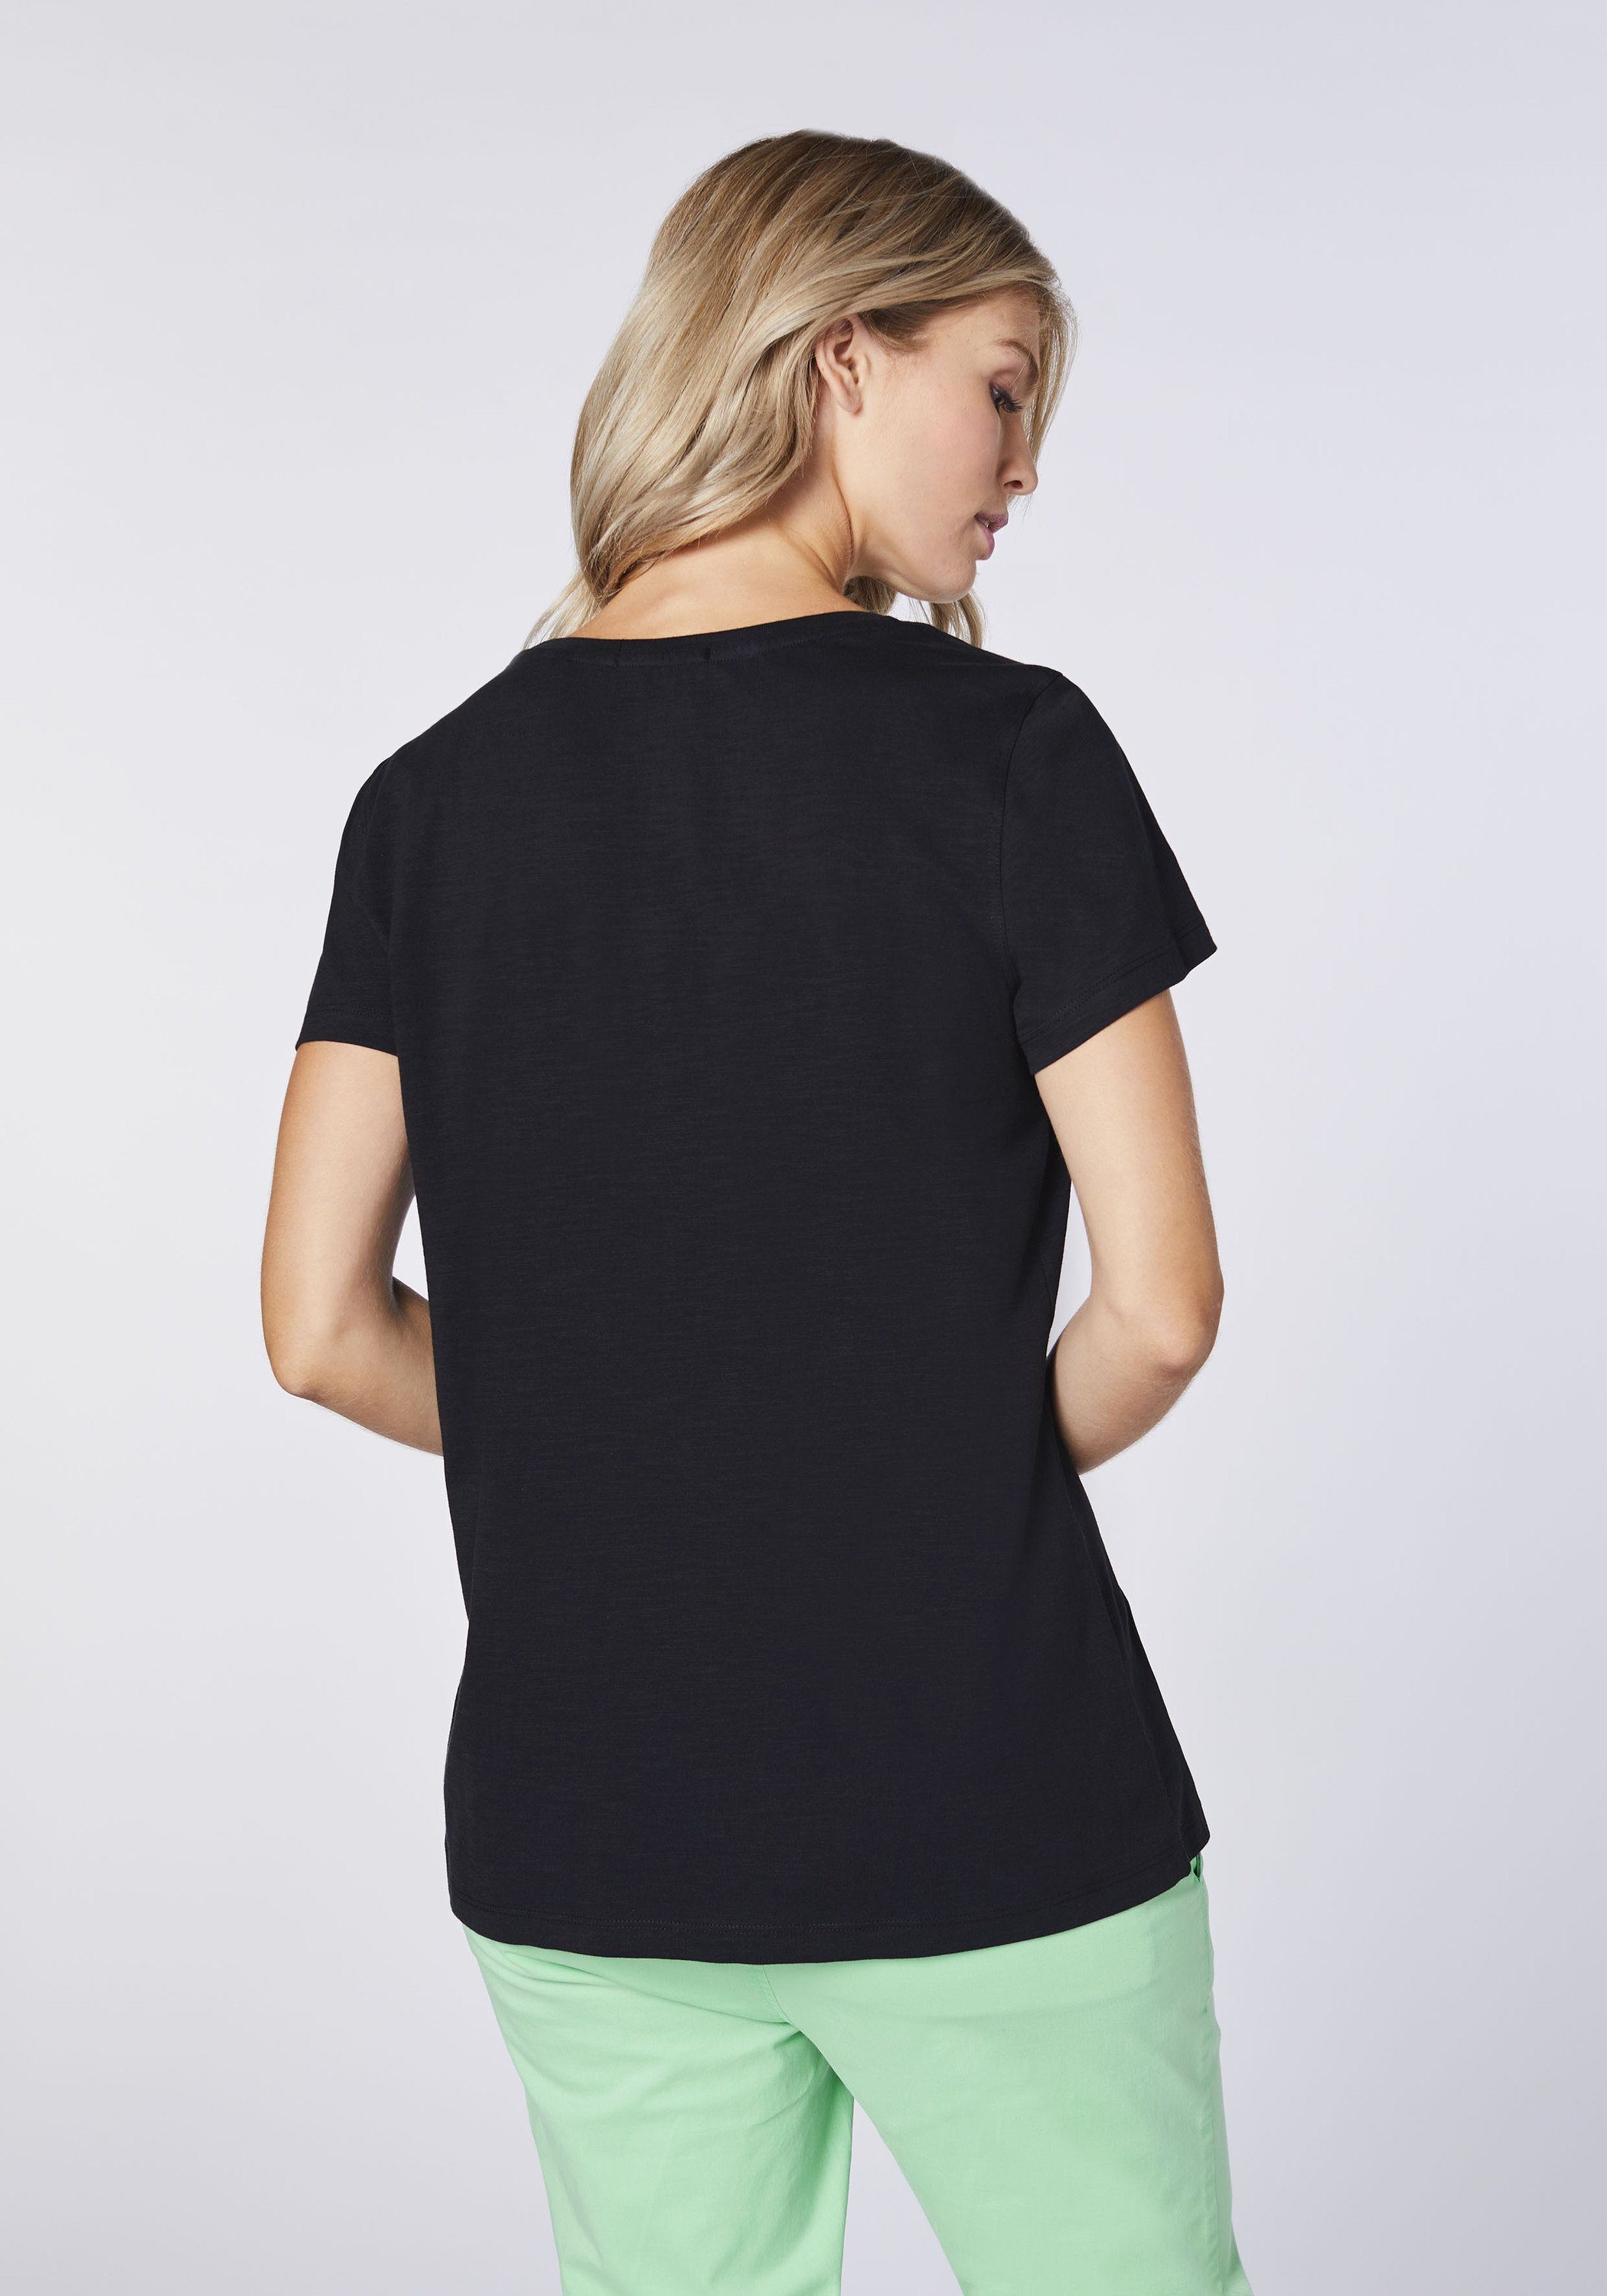 Jumper-Frontprint 19-3911 Chiemsee Black Beauty 1 Print-Shirt mit T-Shirt